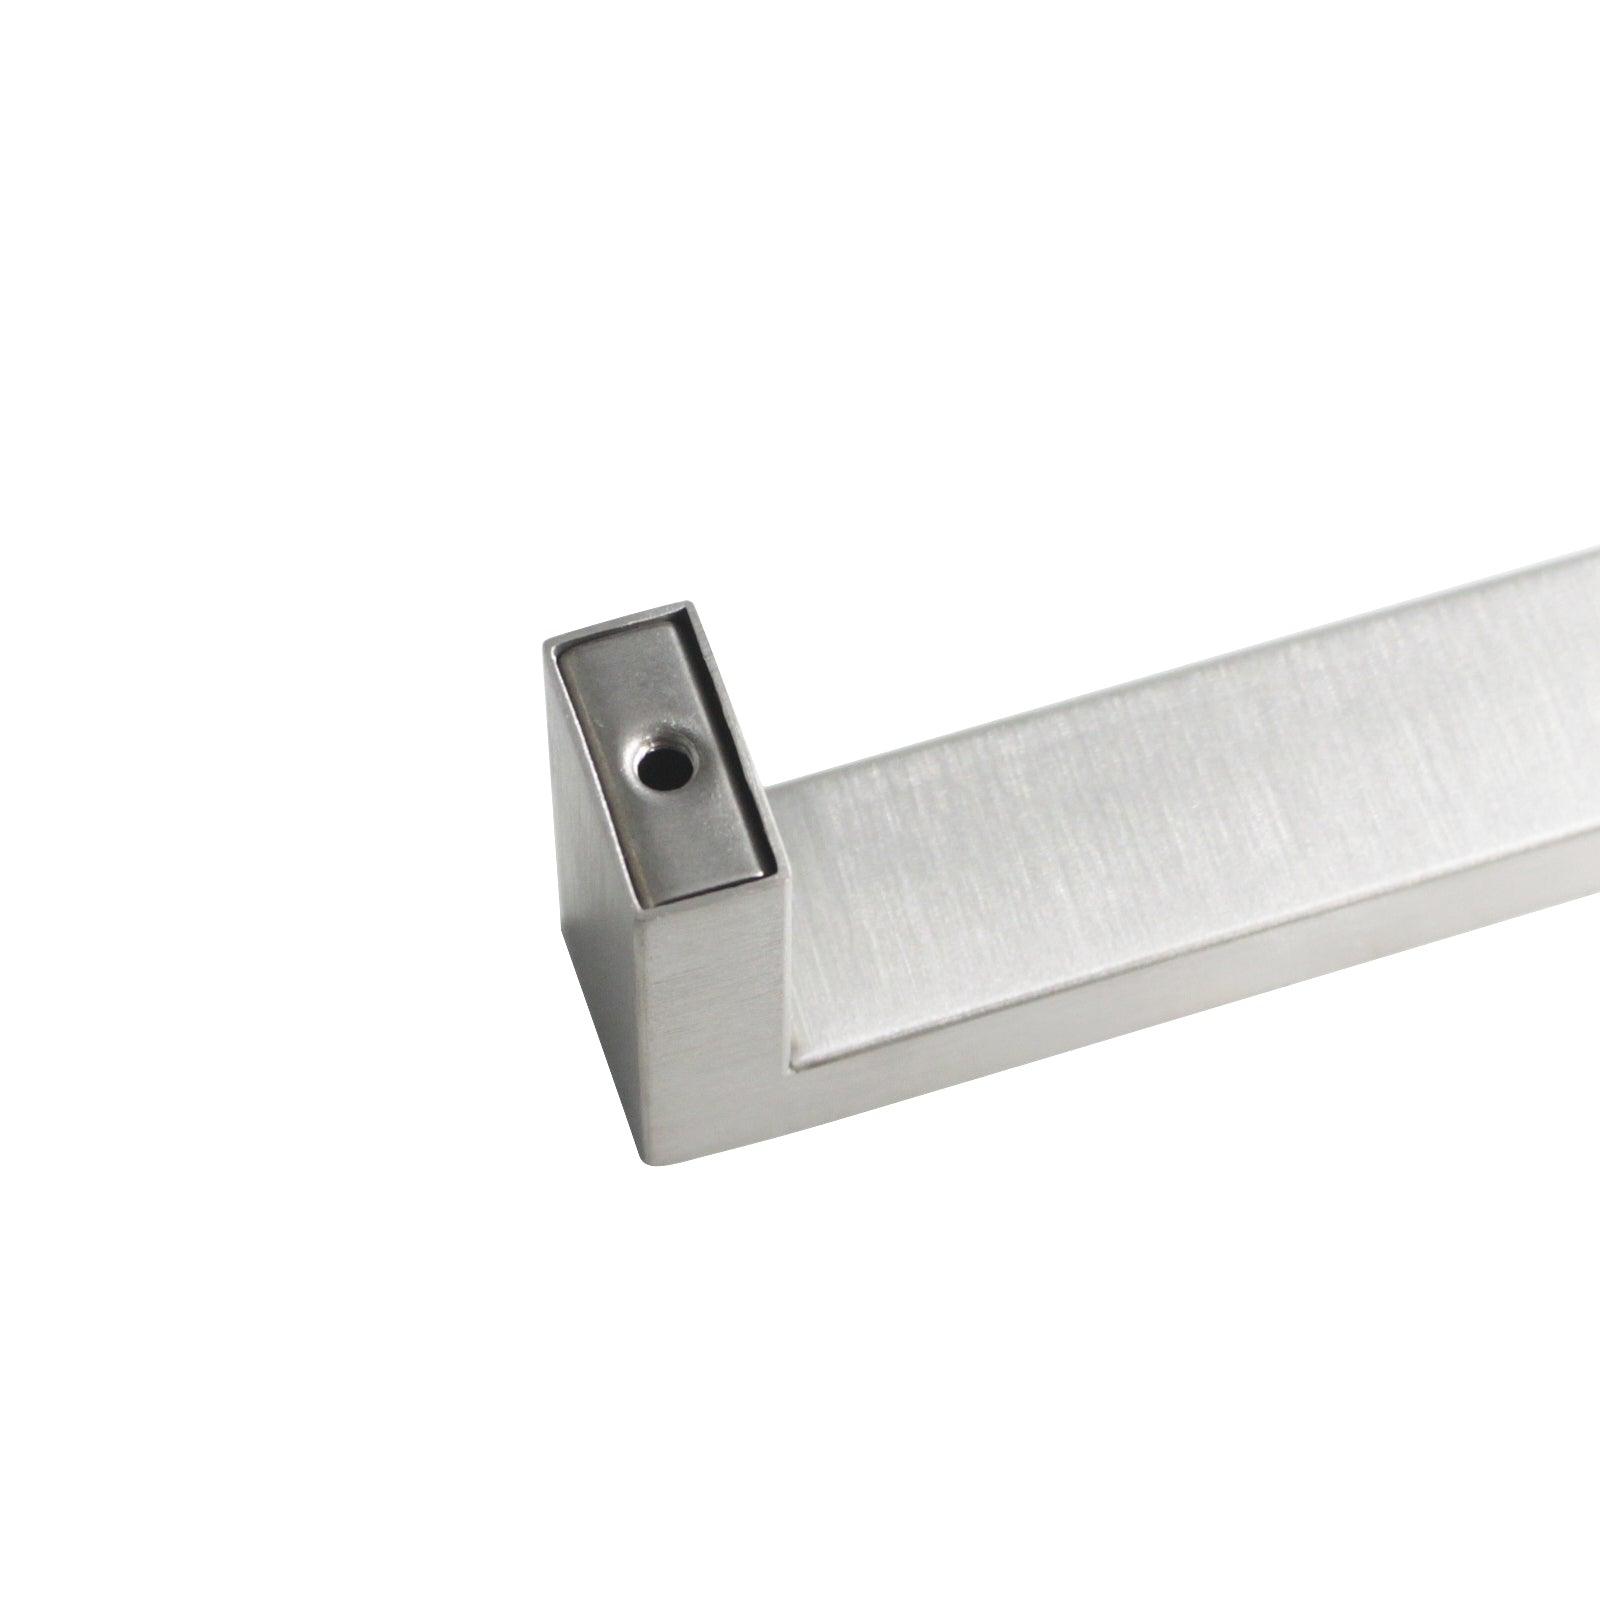 20mm Square Bar Cabinet Handles and Pulls Brushed Nickel Finish Kitchen Hardware PDDJ30HSS